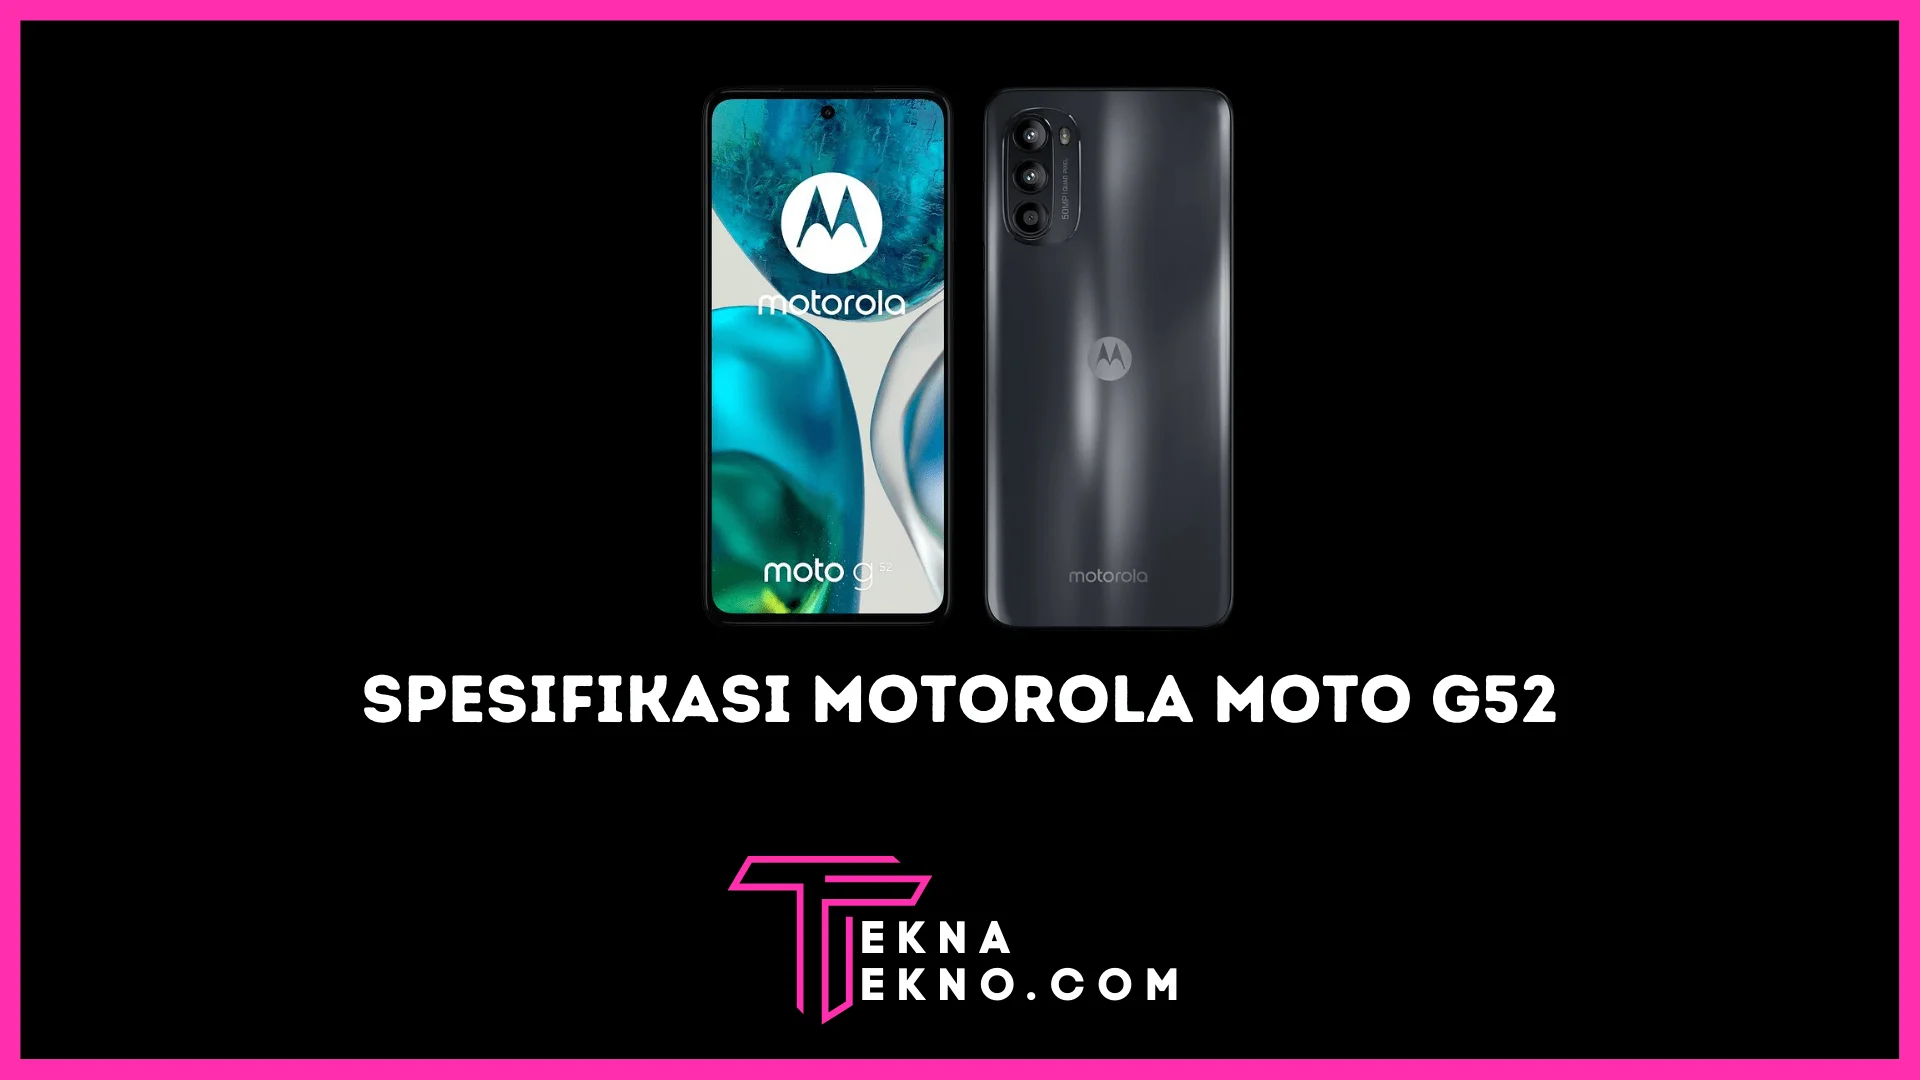 Motorola Moto G52 Siap Rilis, Ini Dia Bocoran Spesifikasi dan Harganya